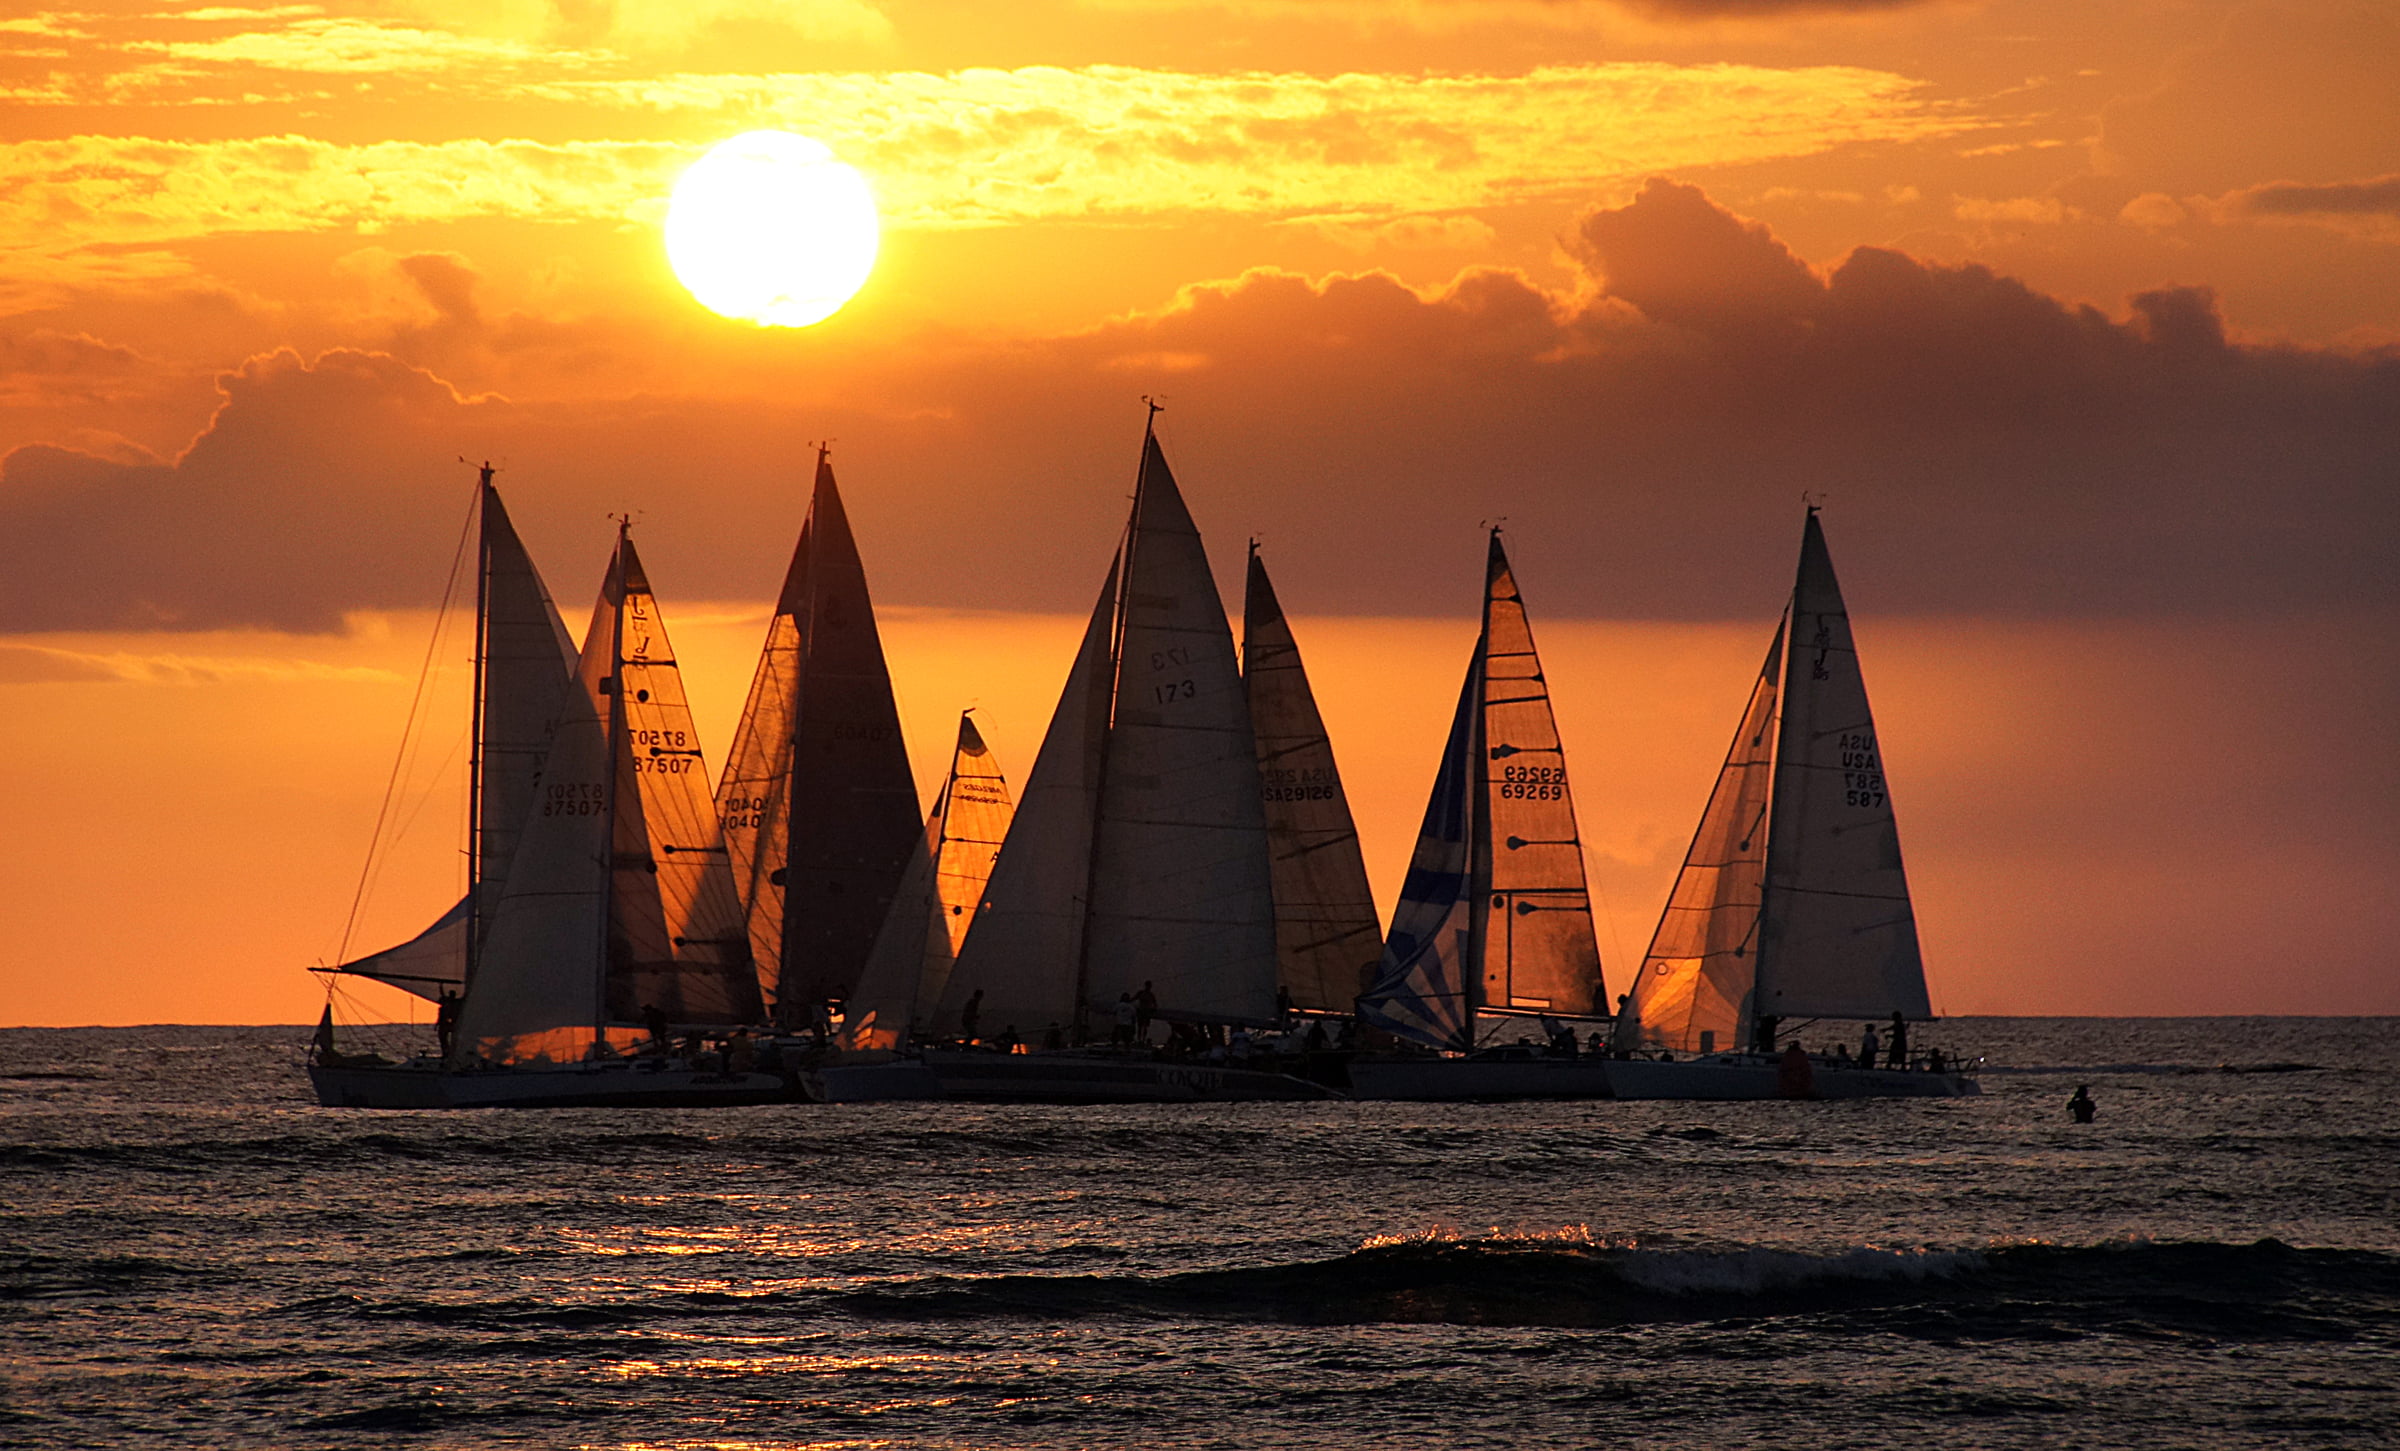 sailboats on wide ocean at sunset, Sailing, Waikiki, Honolulu  Hawaii